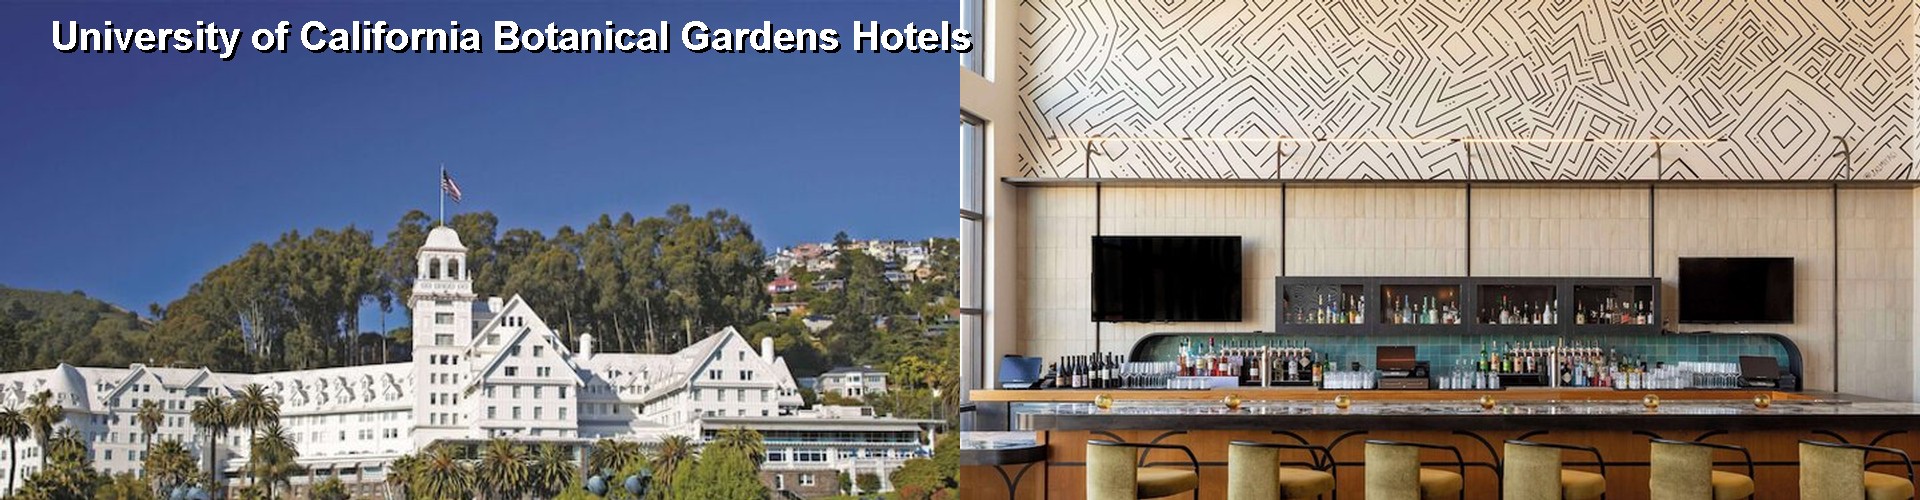 4 Best Hotels near University of California Botanical Gardens